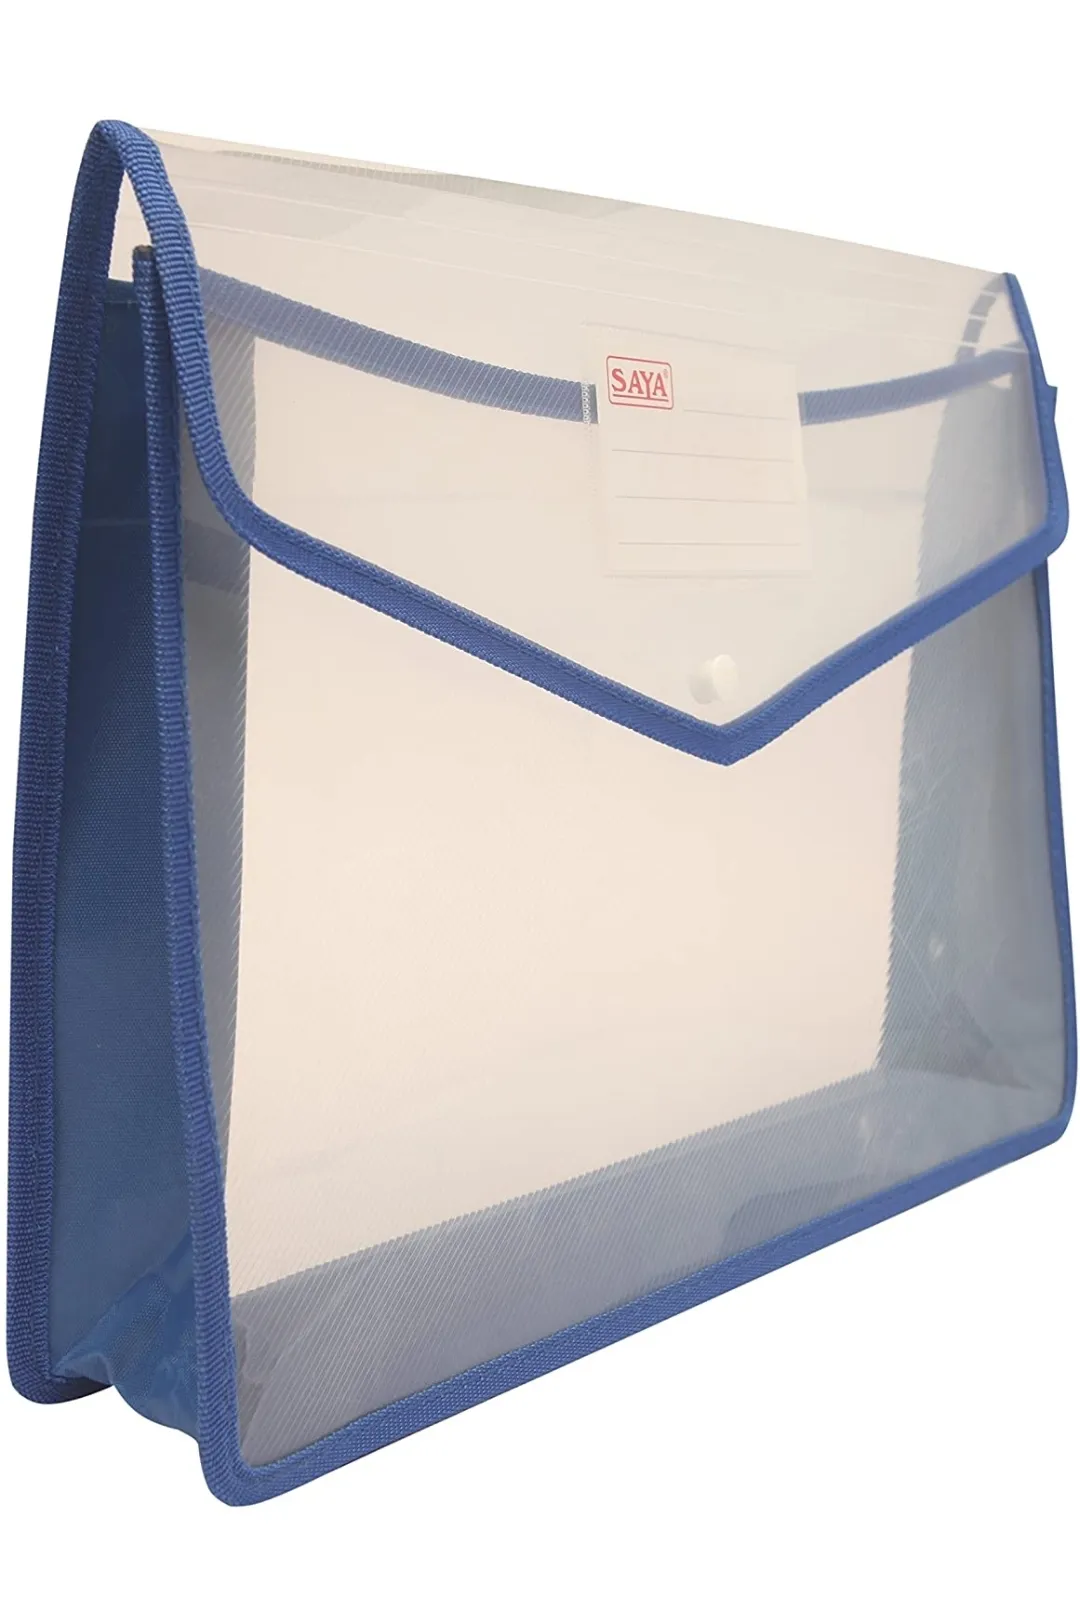 Saya Flexi Document Bag Eco FS, SY - 090, 37 X 28.5 cm, Blue Color, Pack of 1